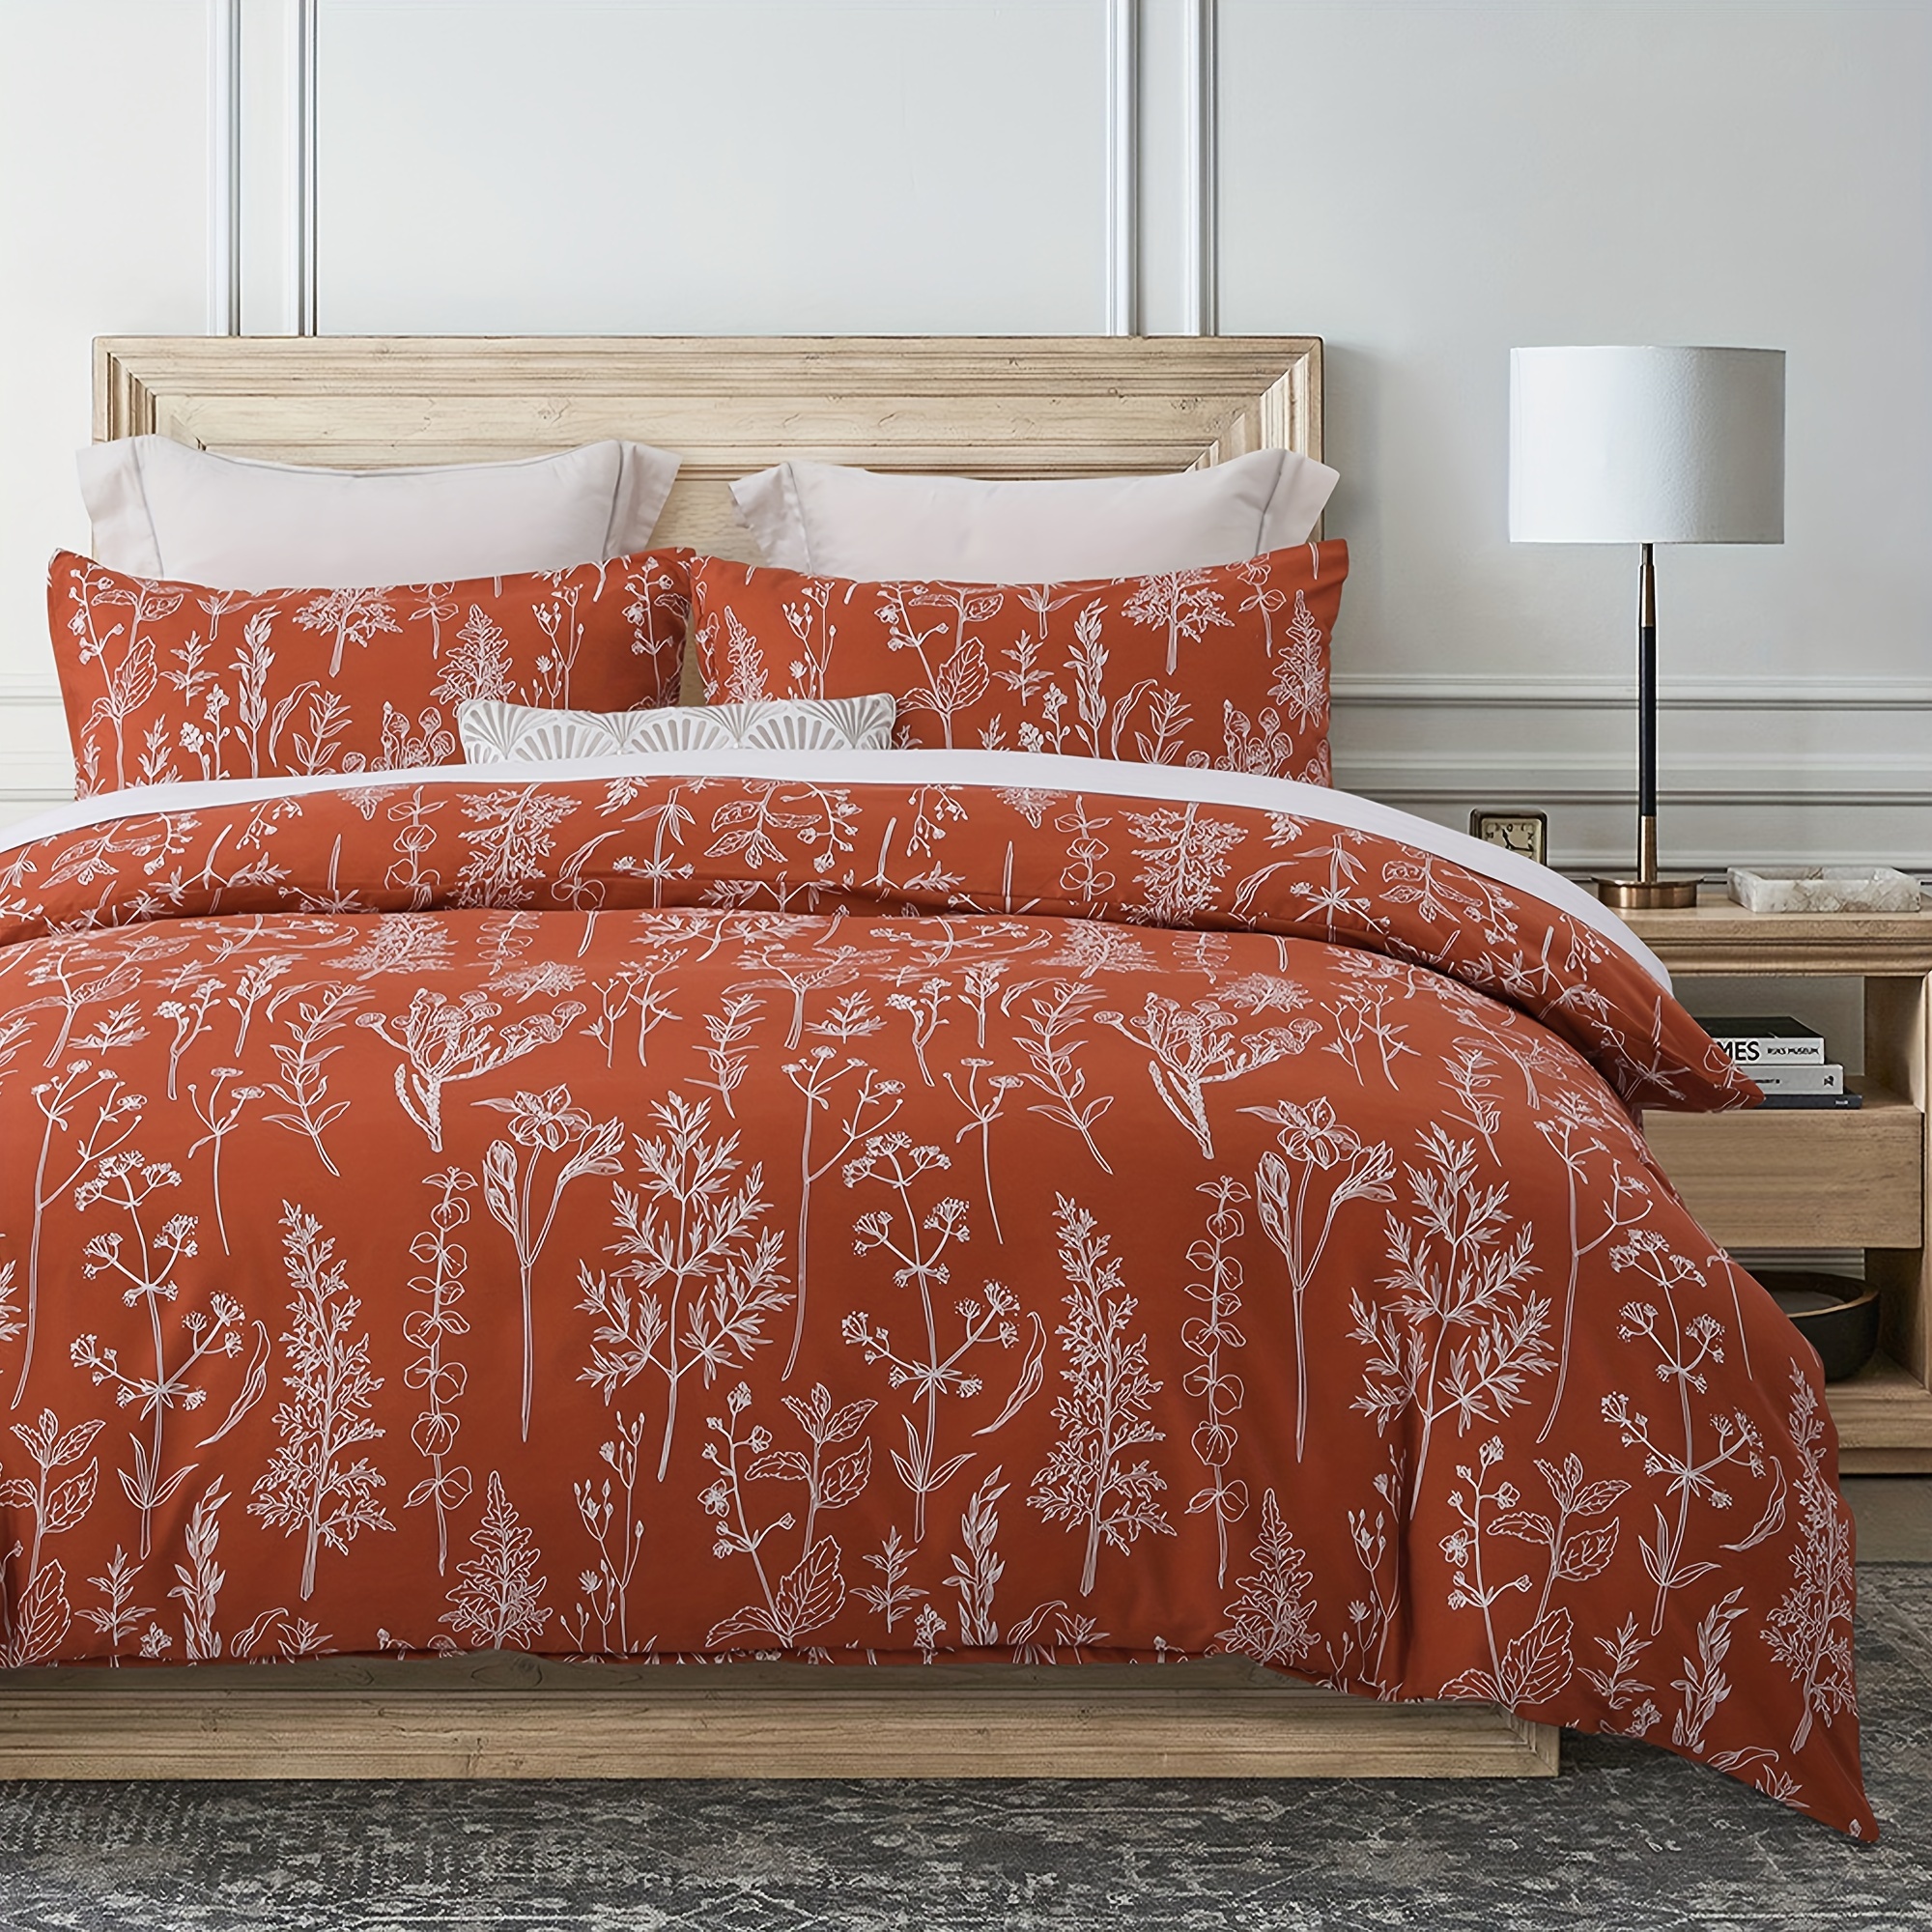 

Comforter Set, Soft Microfiber All Season Comforter, Coral Orange Printed With White Botanical Pattern, Down Alternative Machine Washable